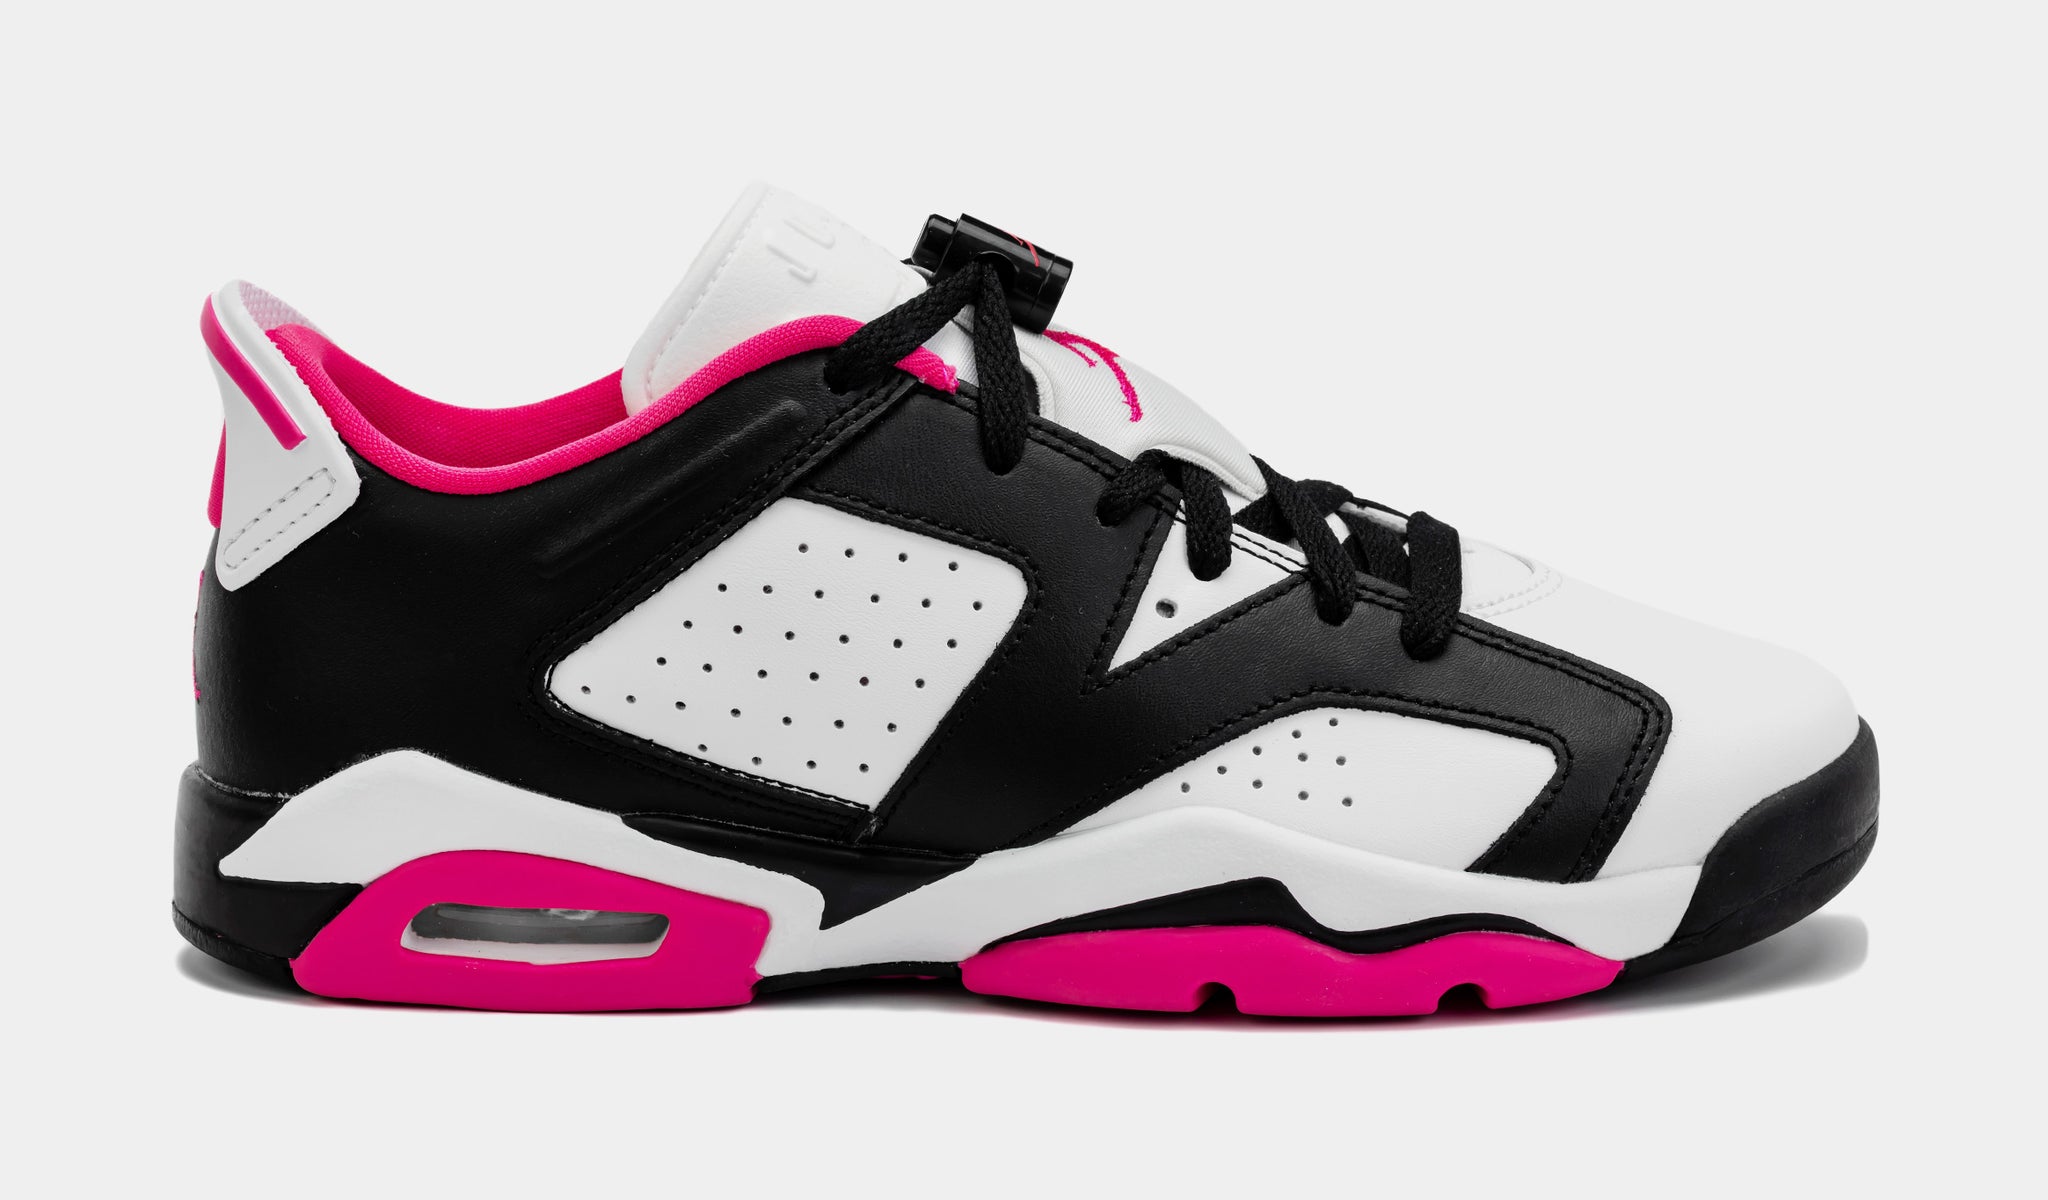 Air Jordan 6 Retro Low Fierce Pink Grade School Lifestyle Shoes (Black/Pink)